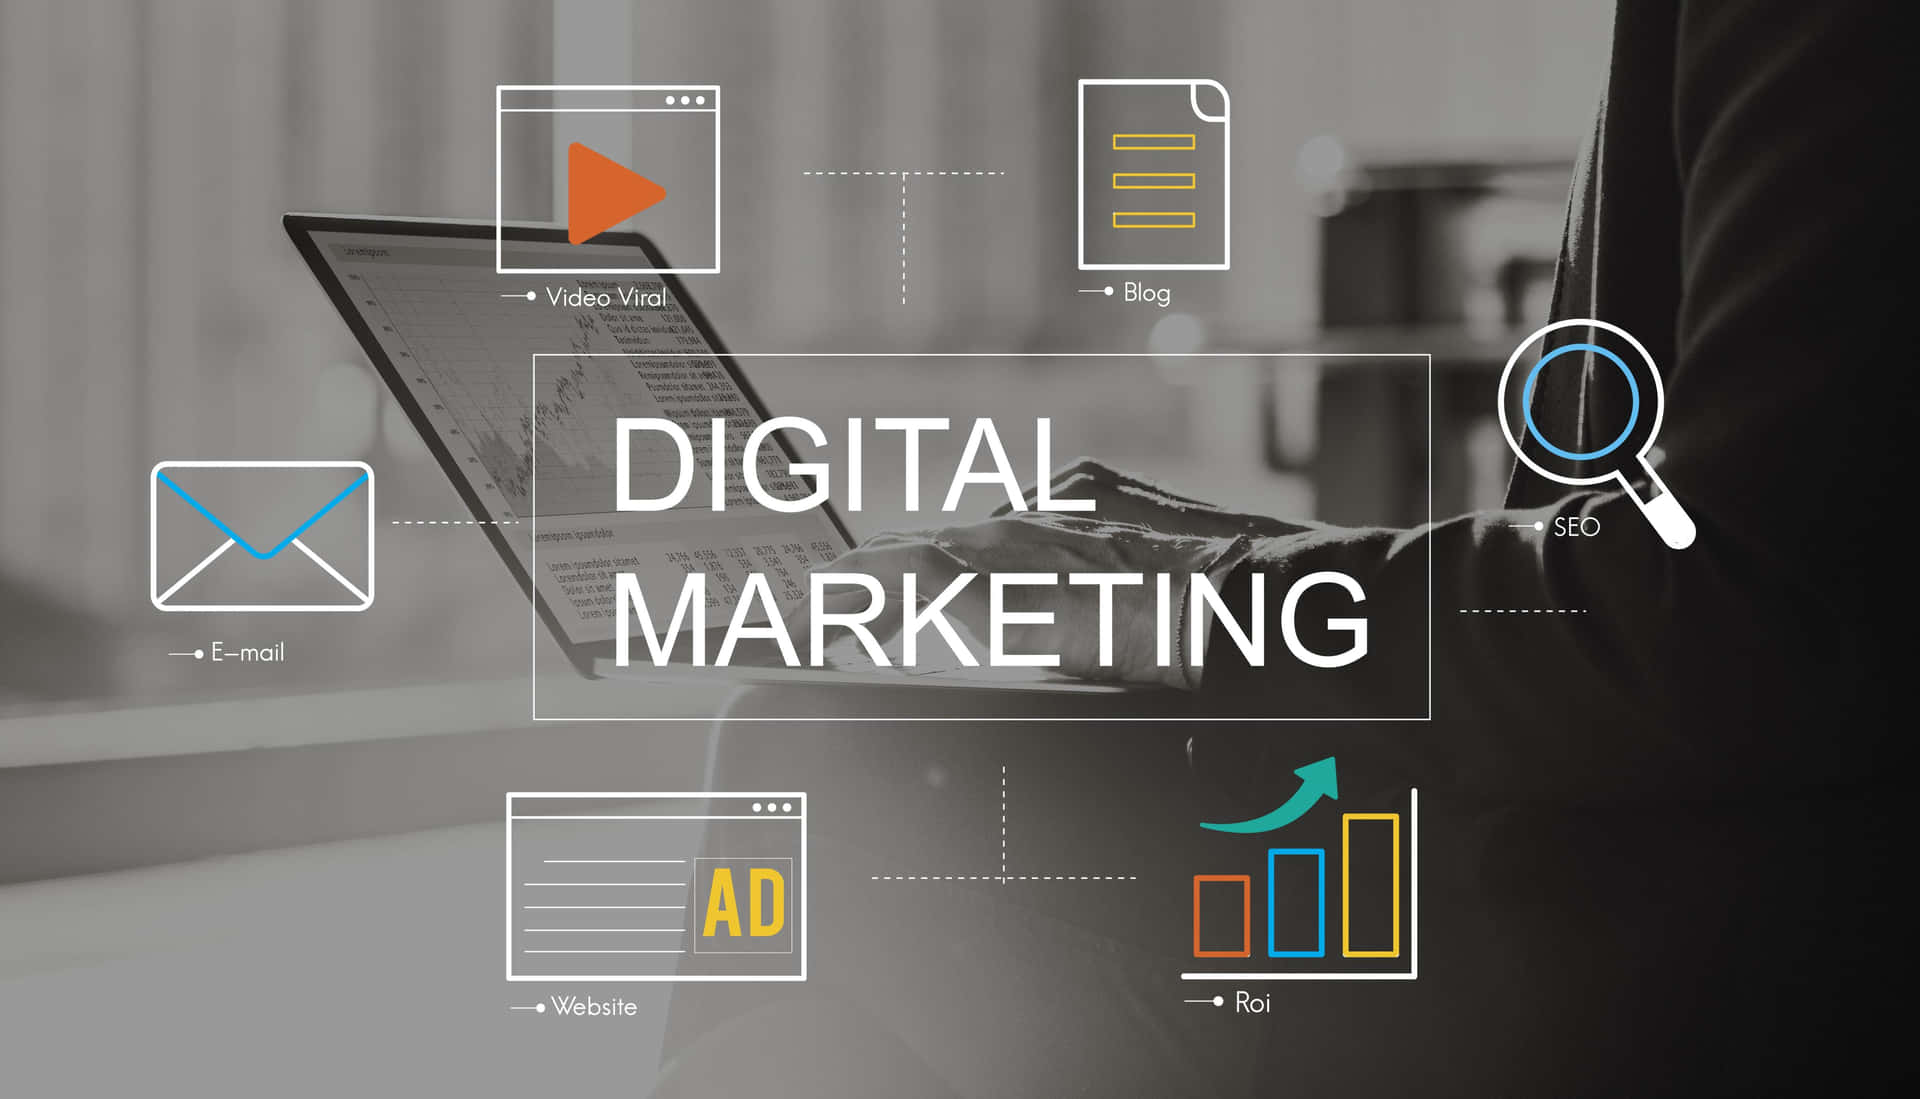 Digital Marketing - What Is It?